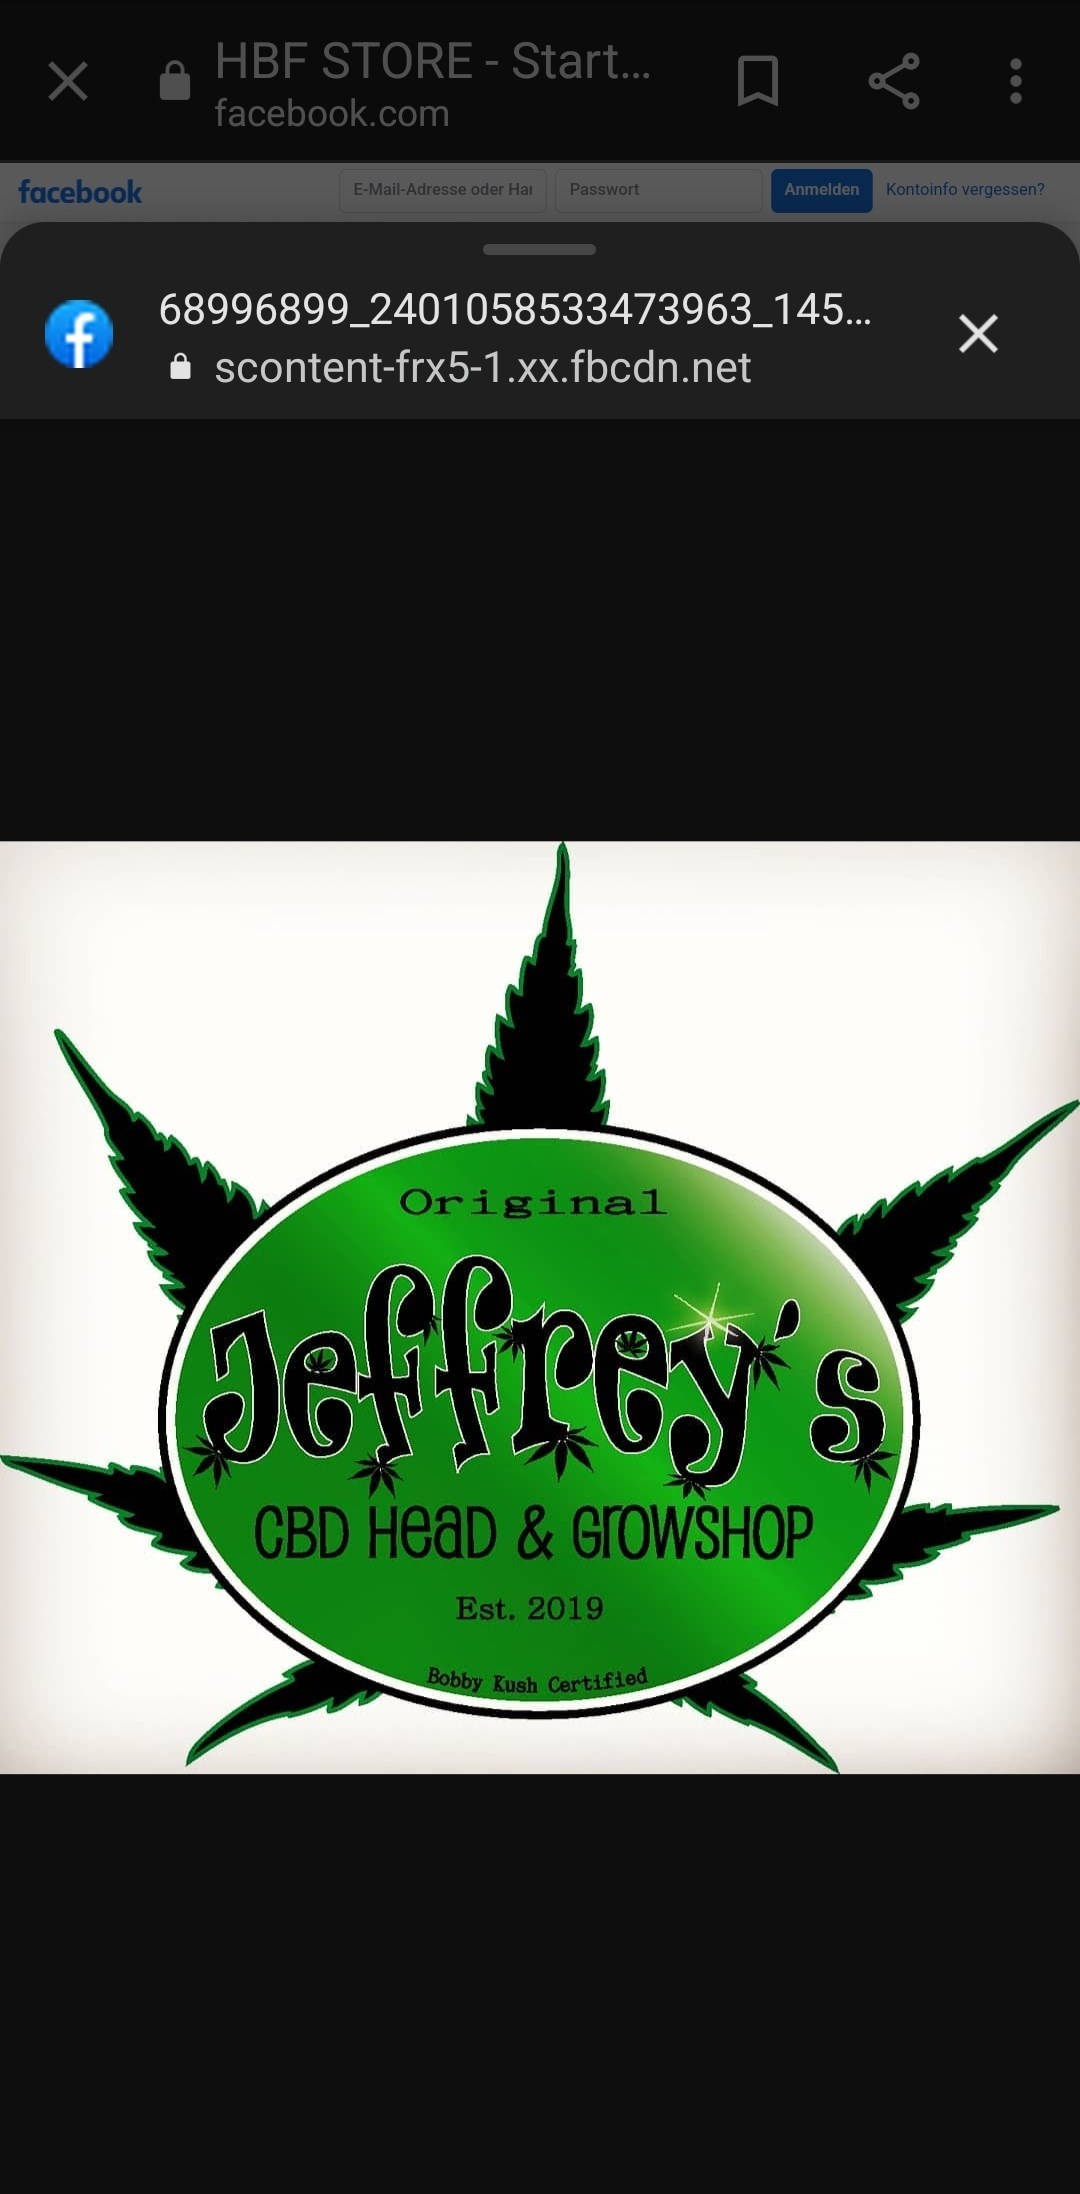 CBD-Shop: Jeffrey's CBD Head & Growshop